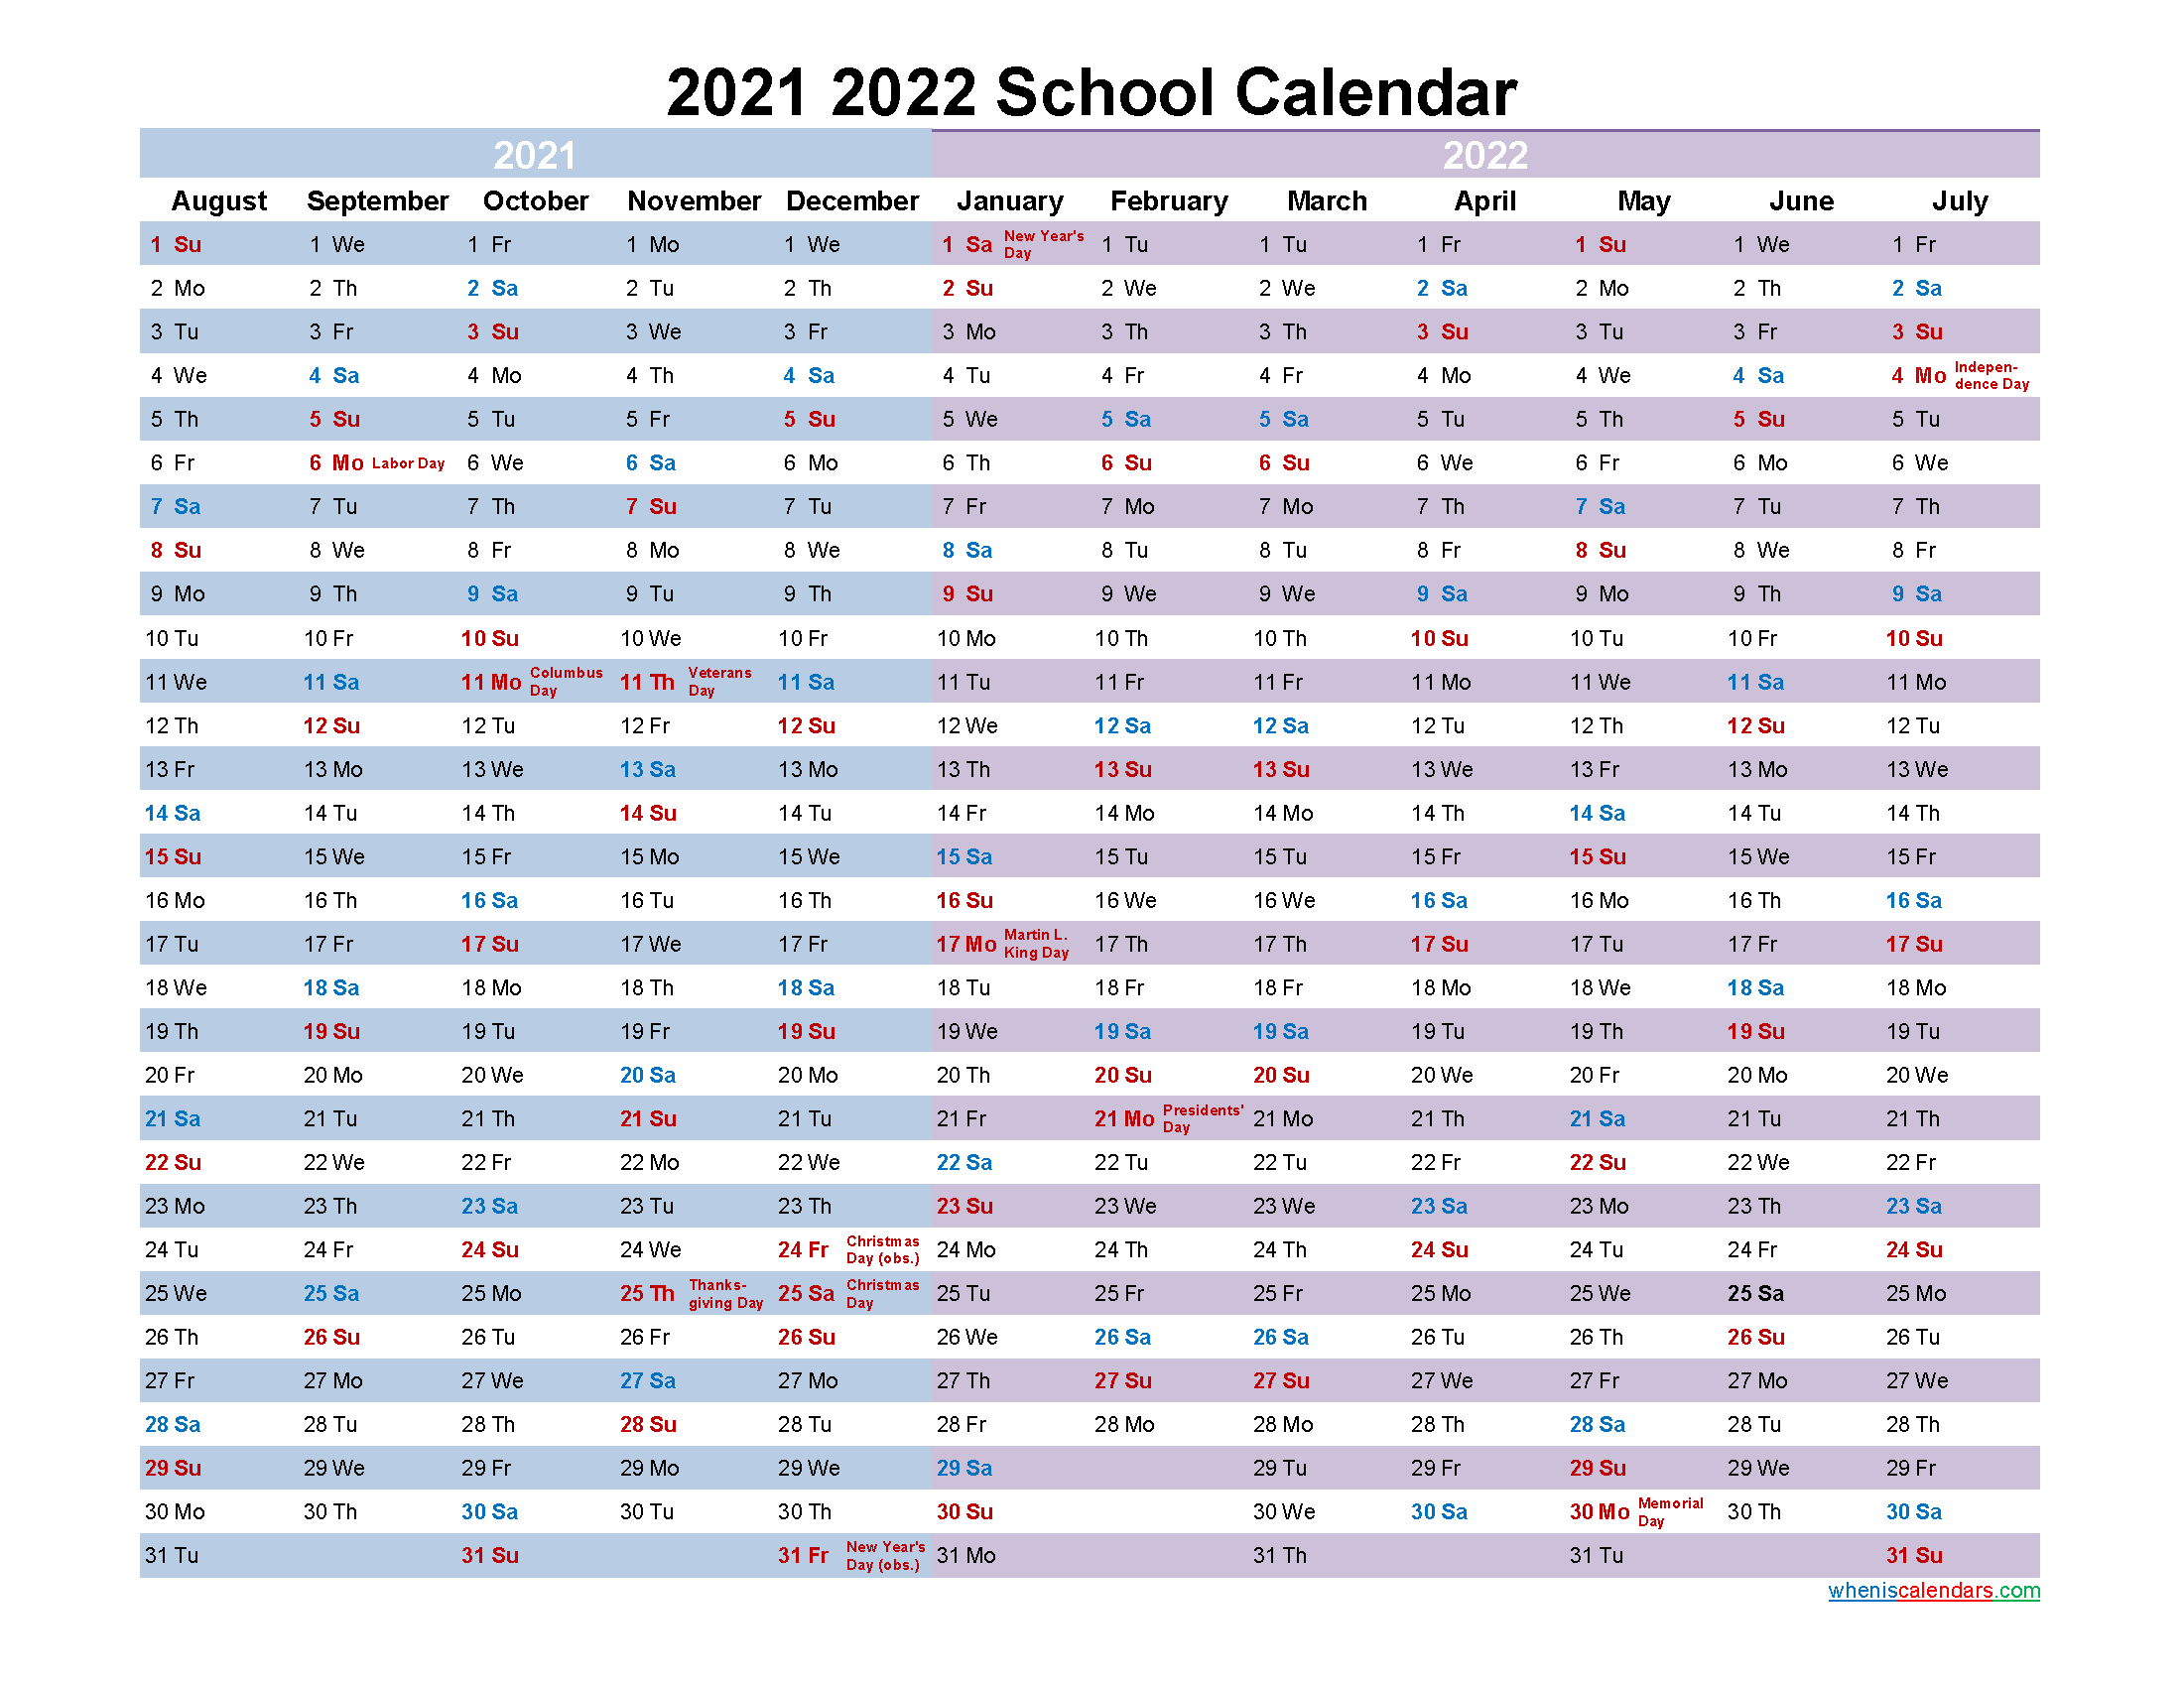 2021 and 2022 School Calendar Printable - Template No.22scl54